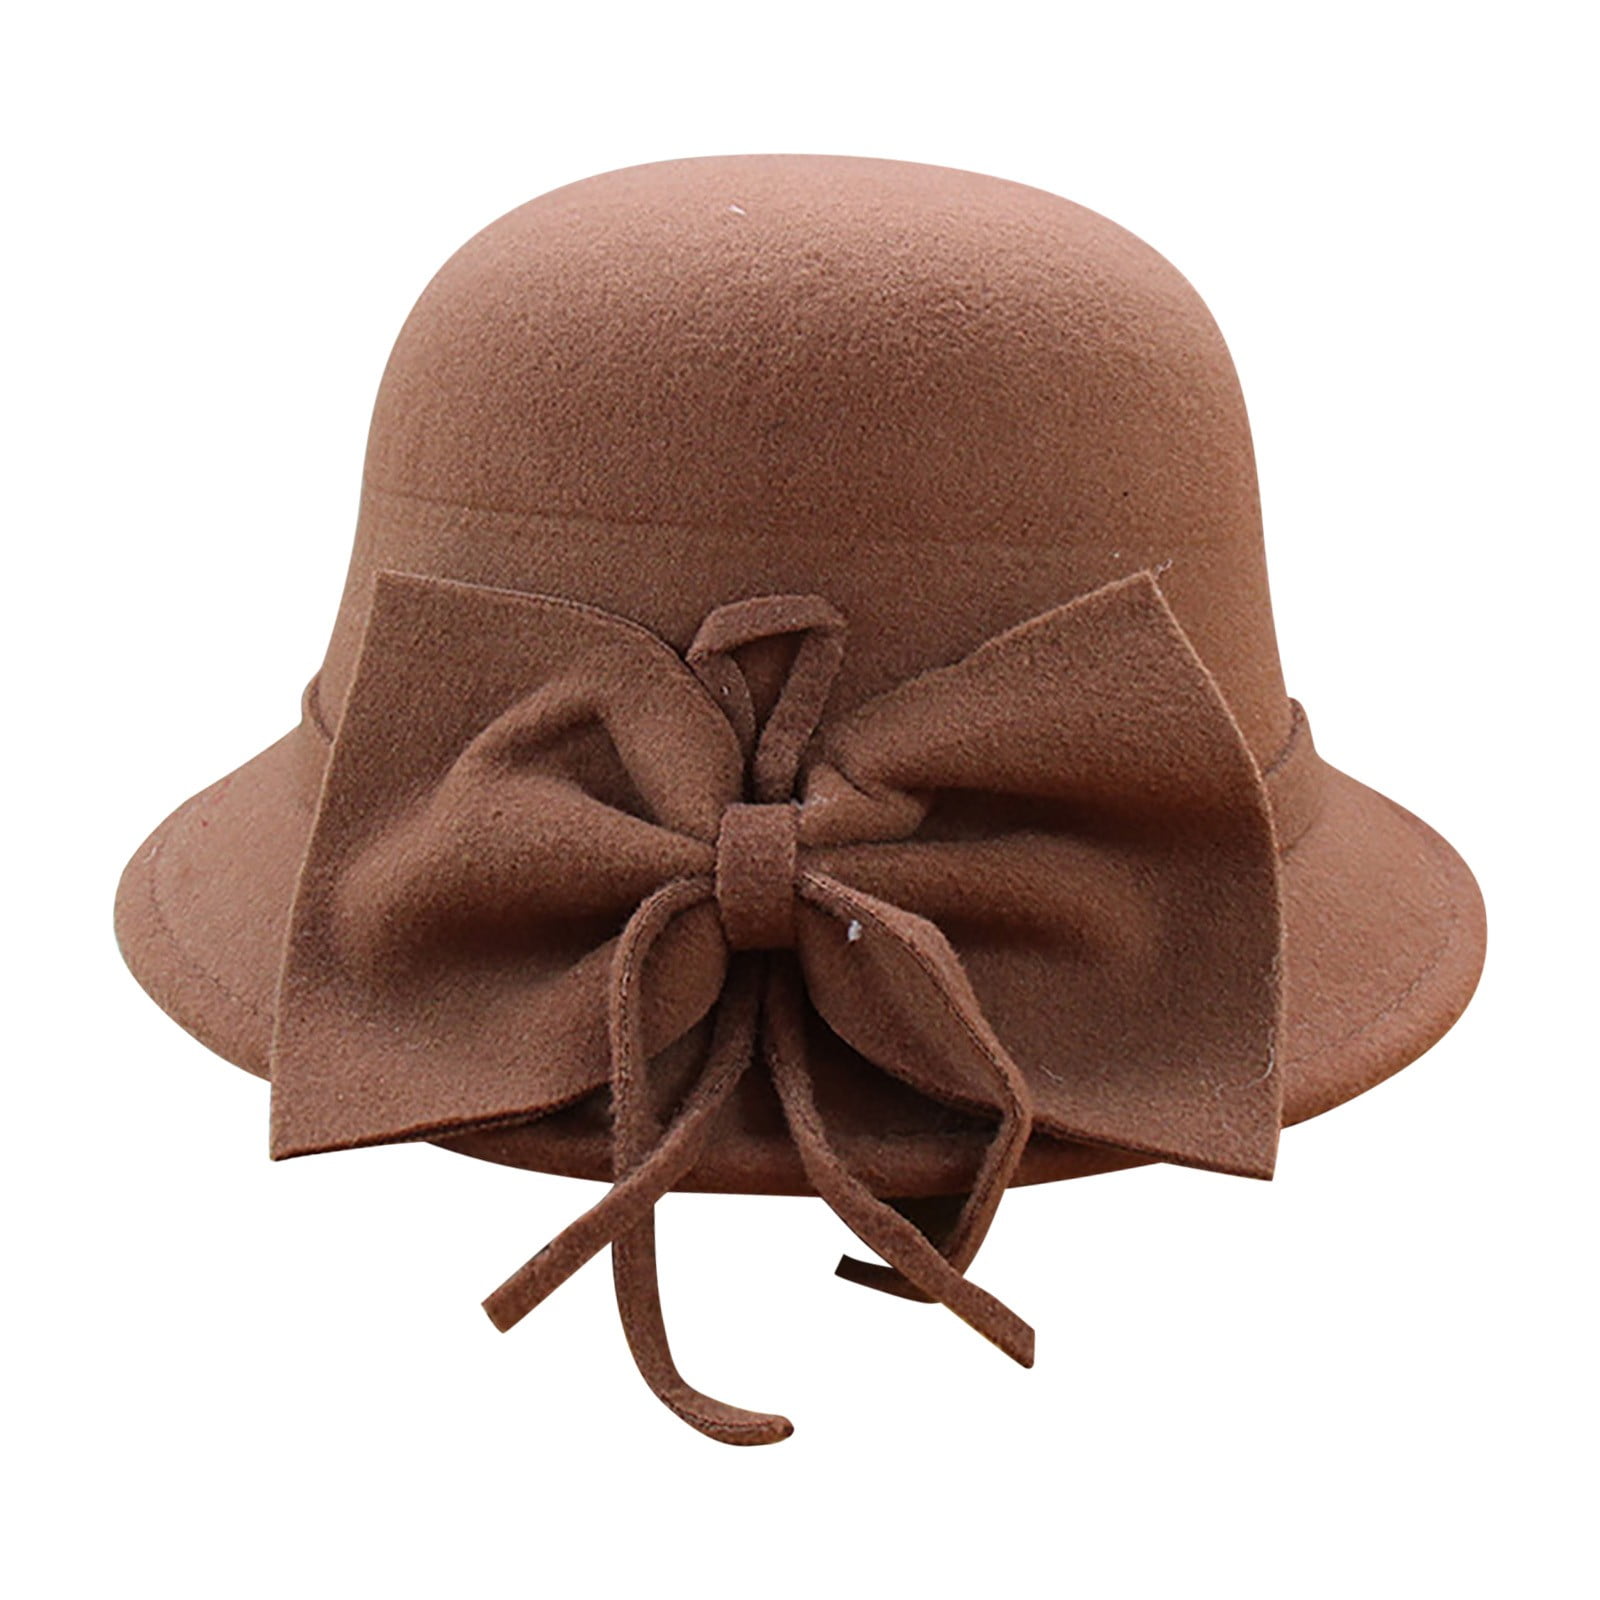 2DXuixsh Knit Bucket Hat Women's Autumn and Winter Bow Knot Round